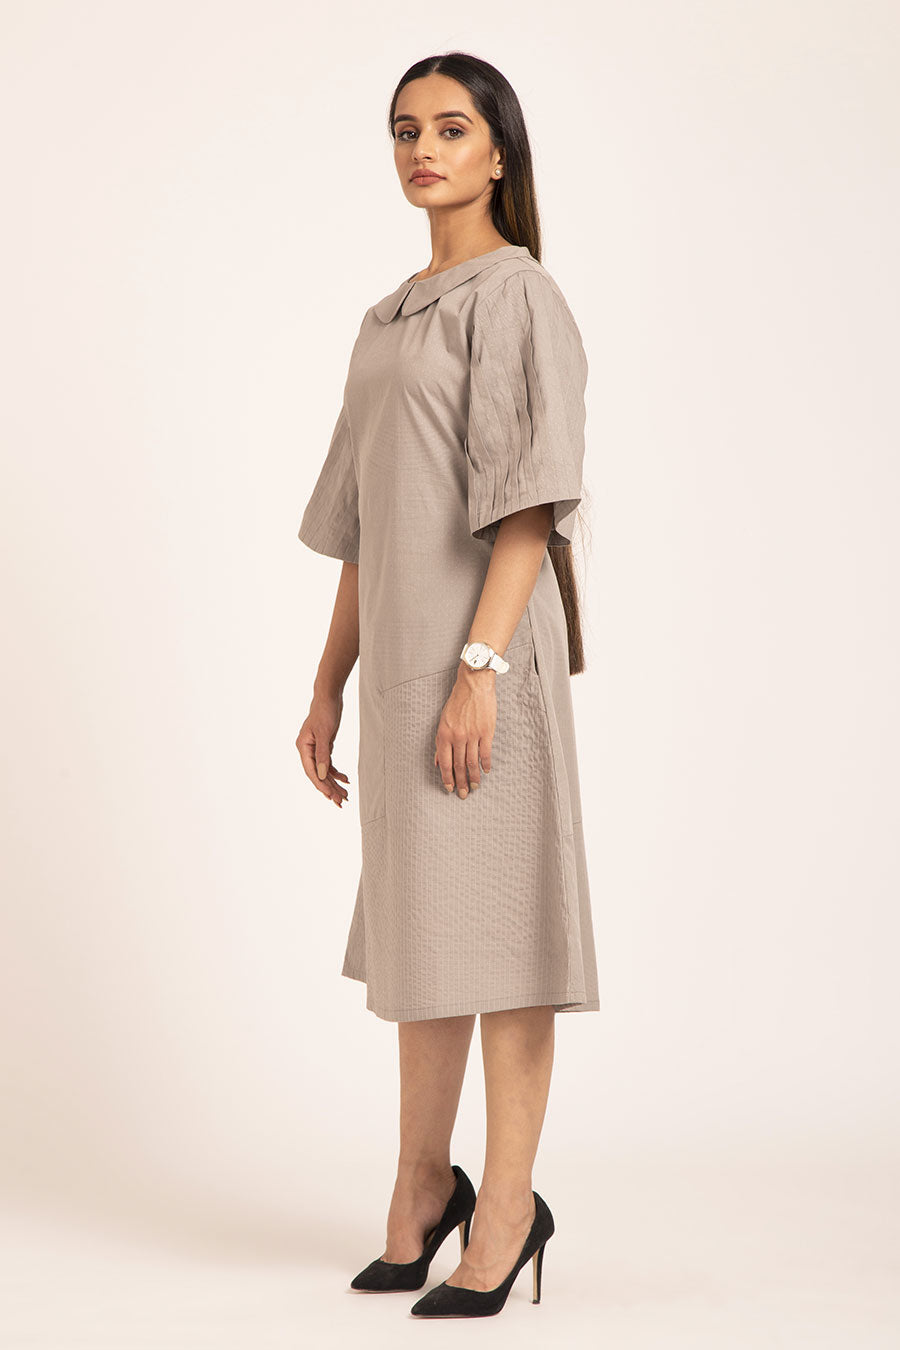 Daffodils - Grey Pleated A-Line Dress